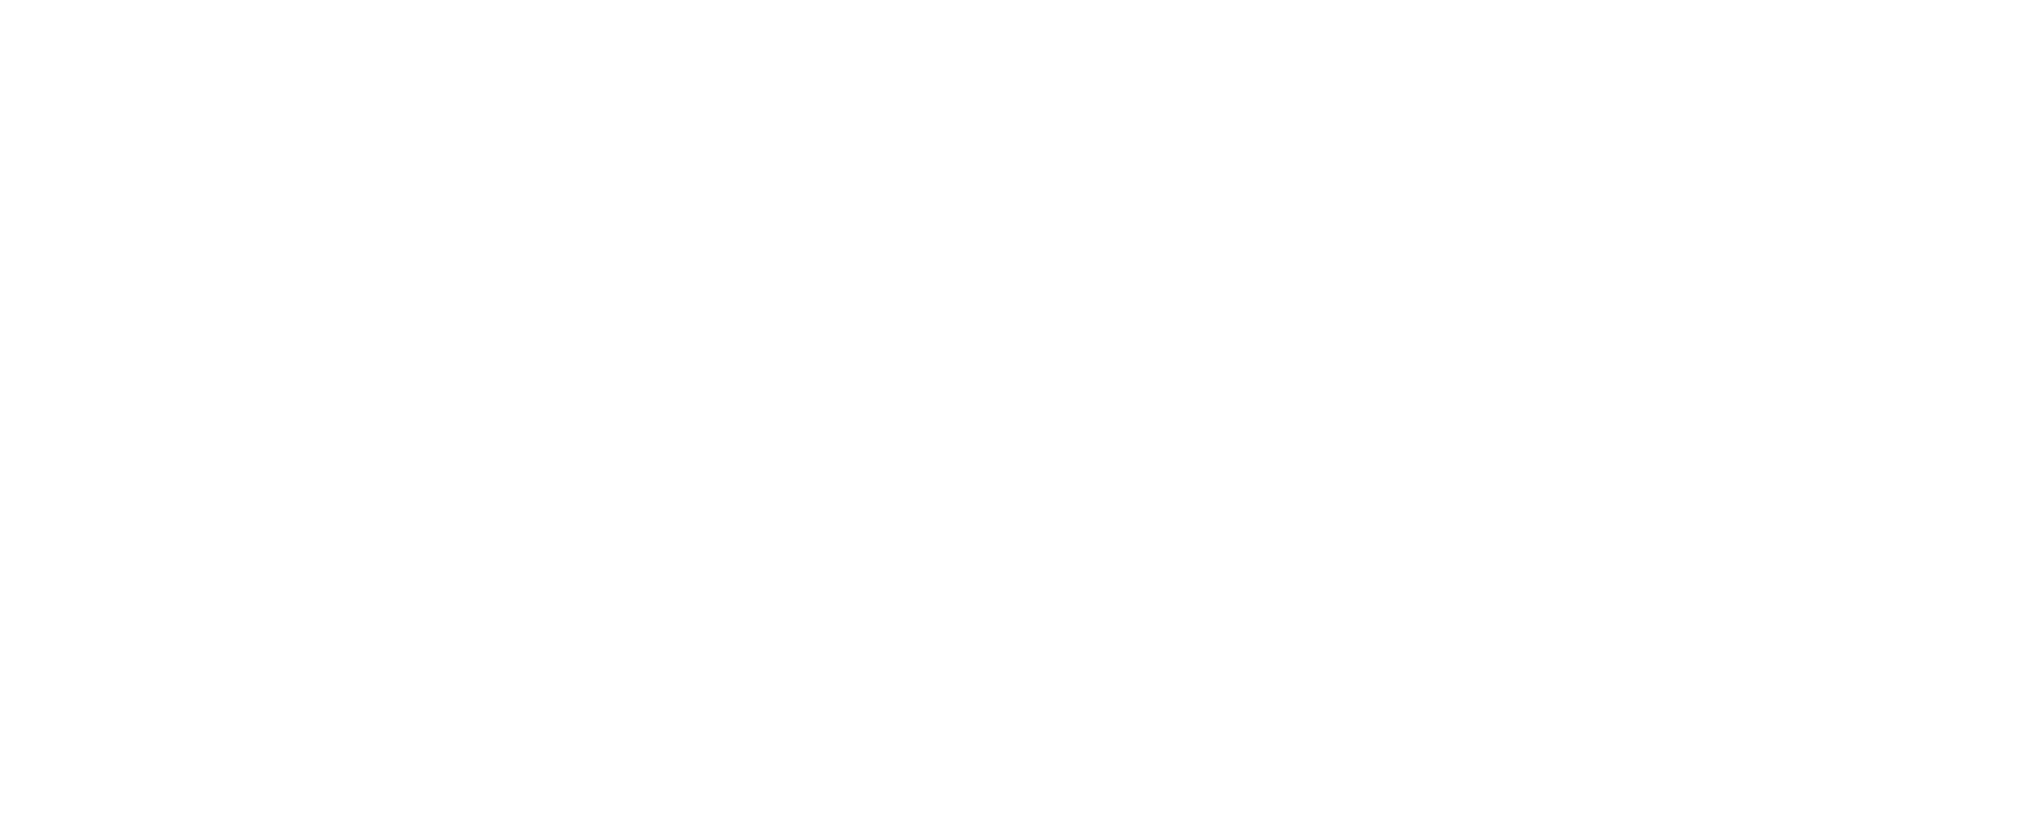 Cerebra Final Lottery Logo horizontal monoREVERSE